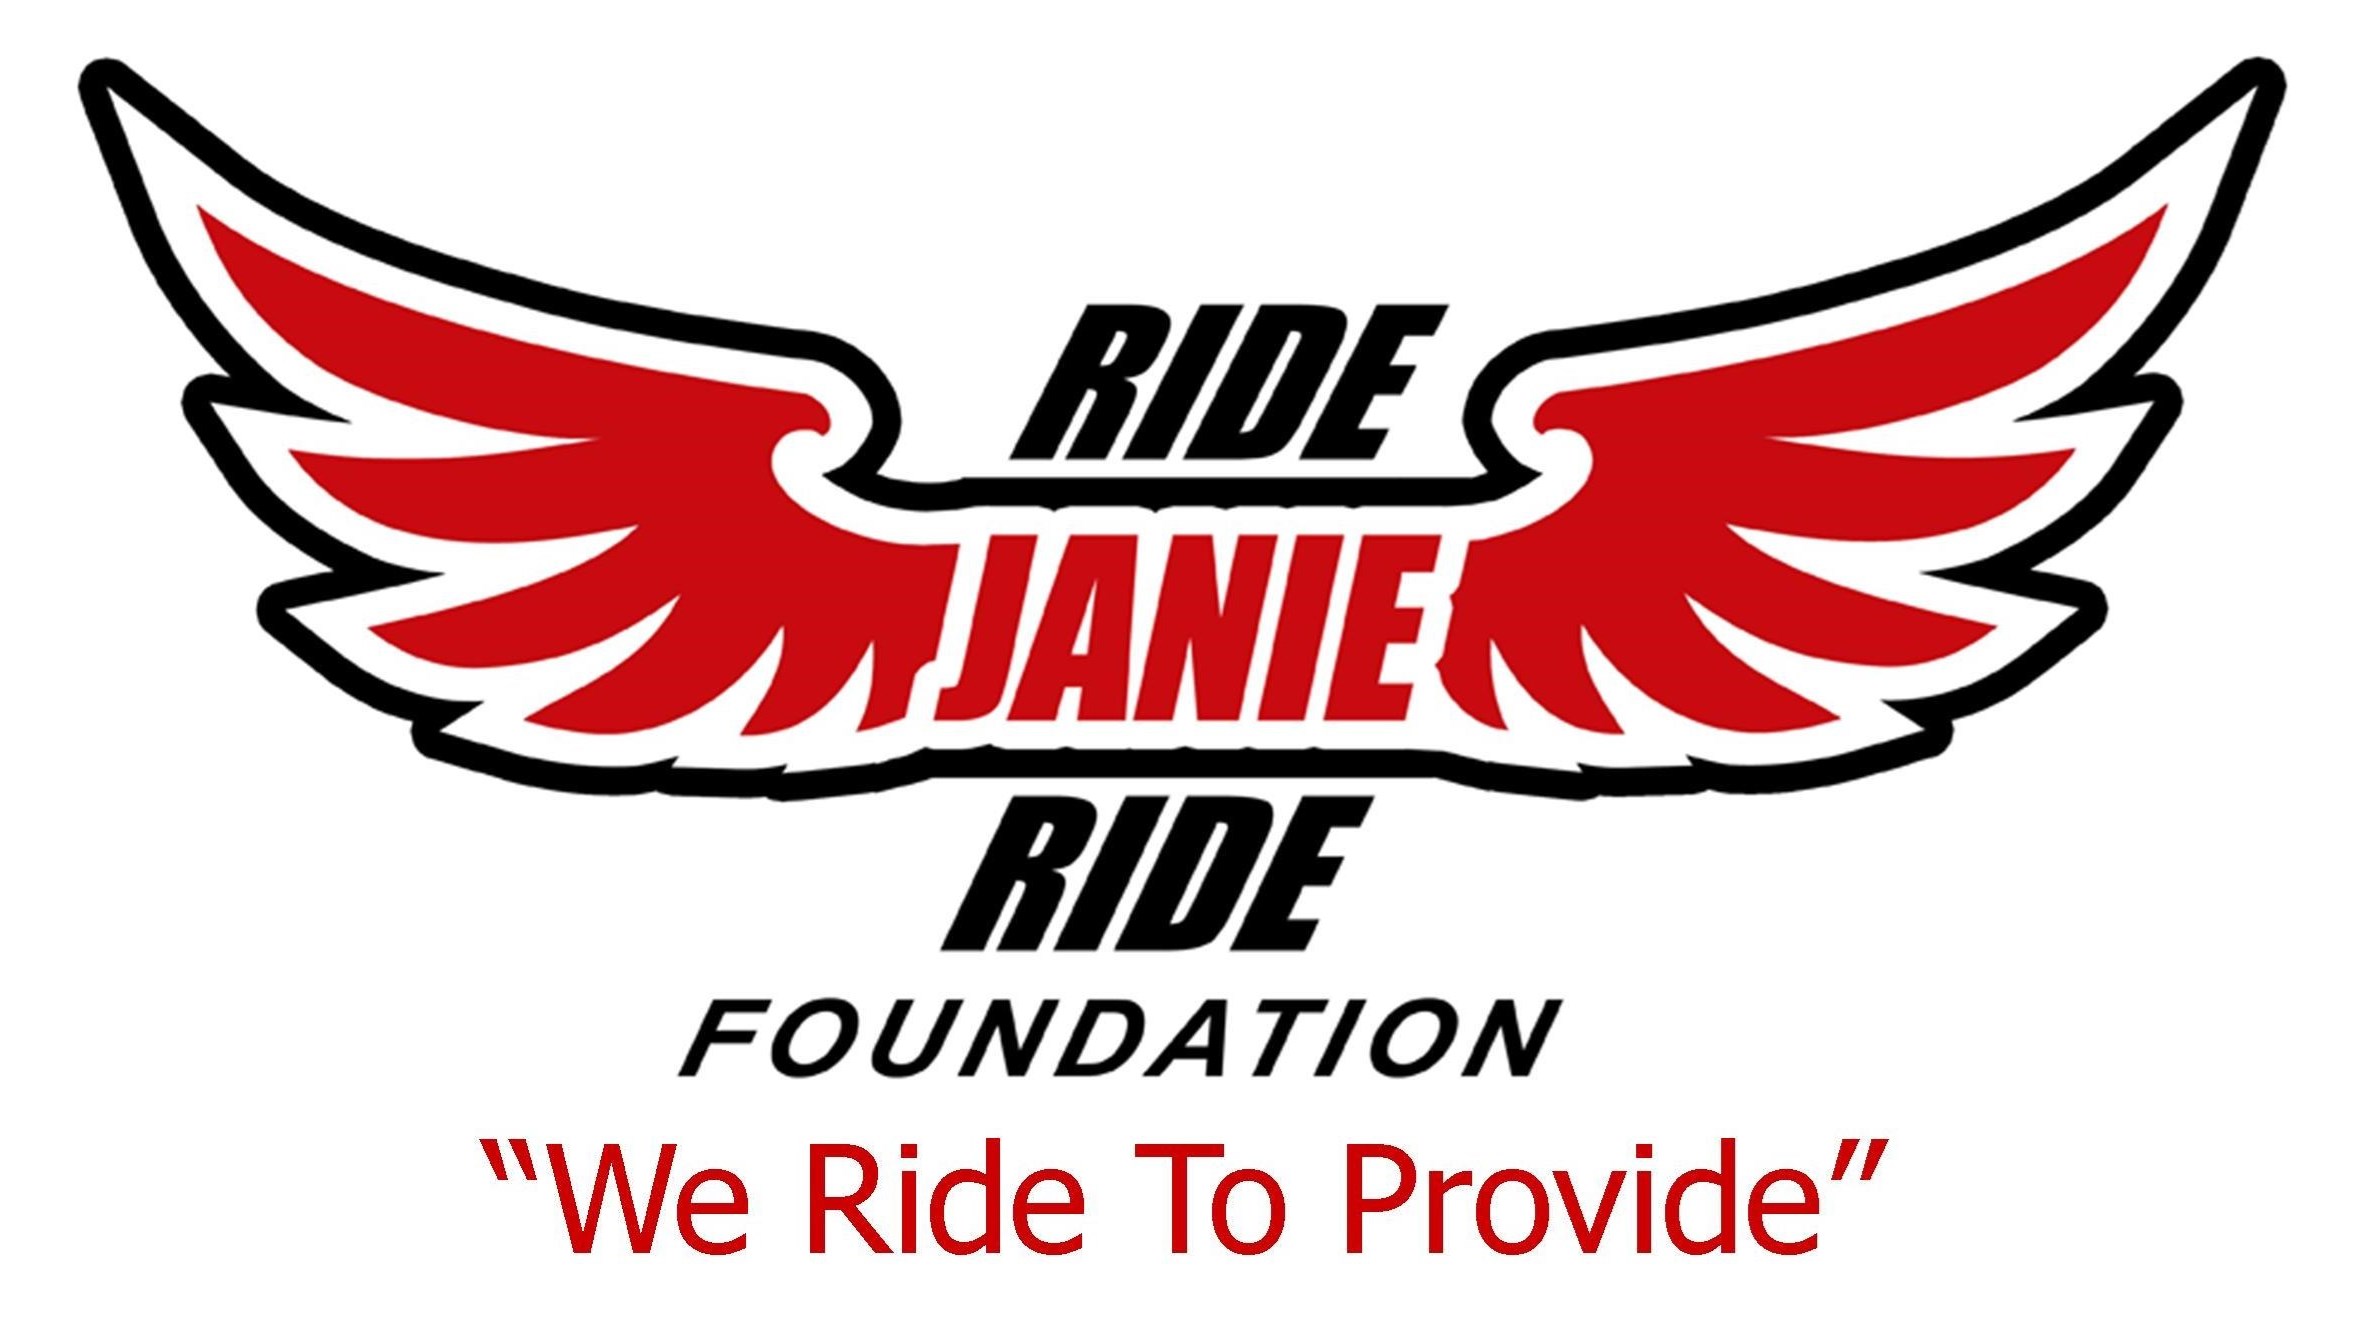 a Sponsor Ride Janie Ride Foundation